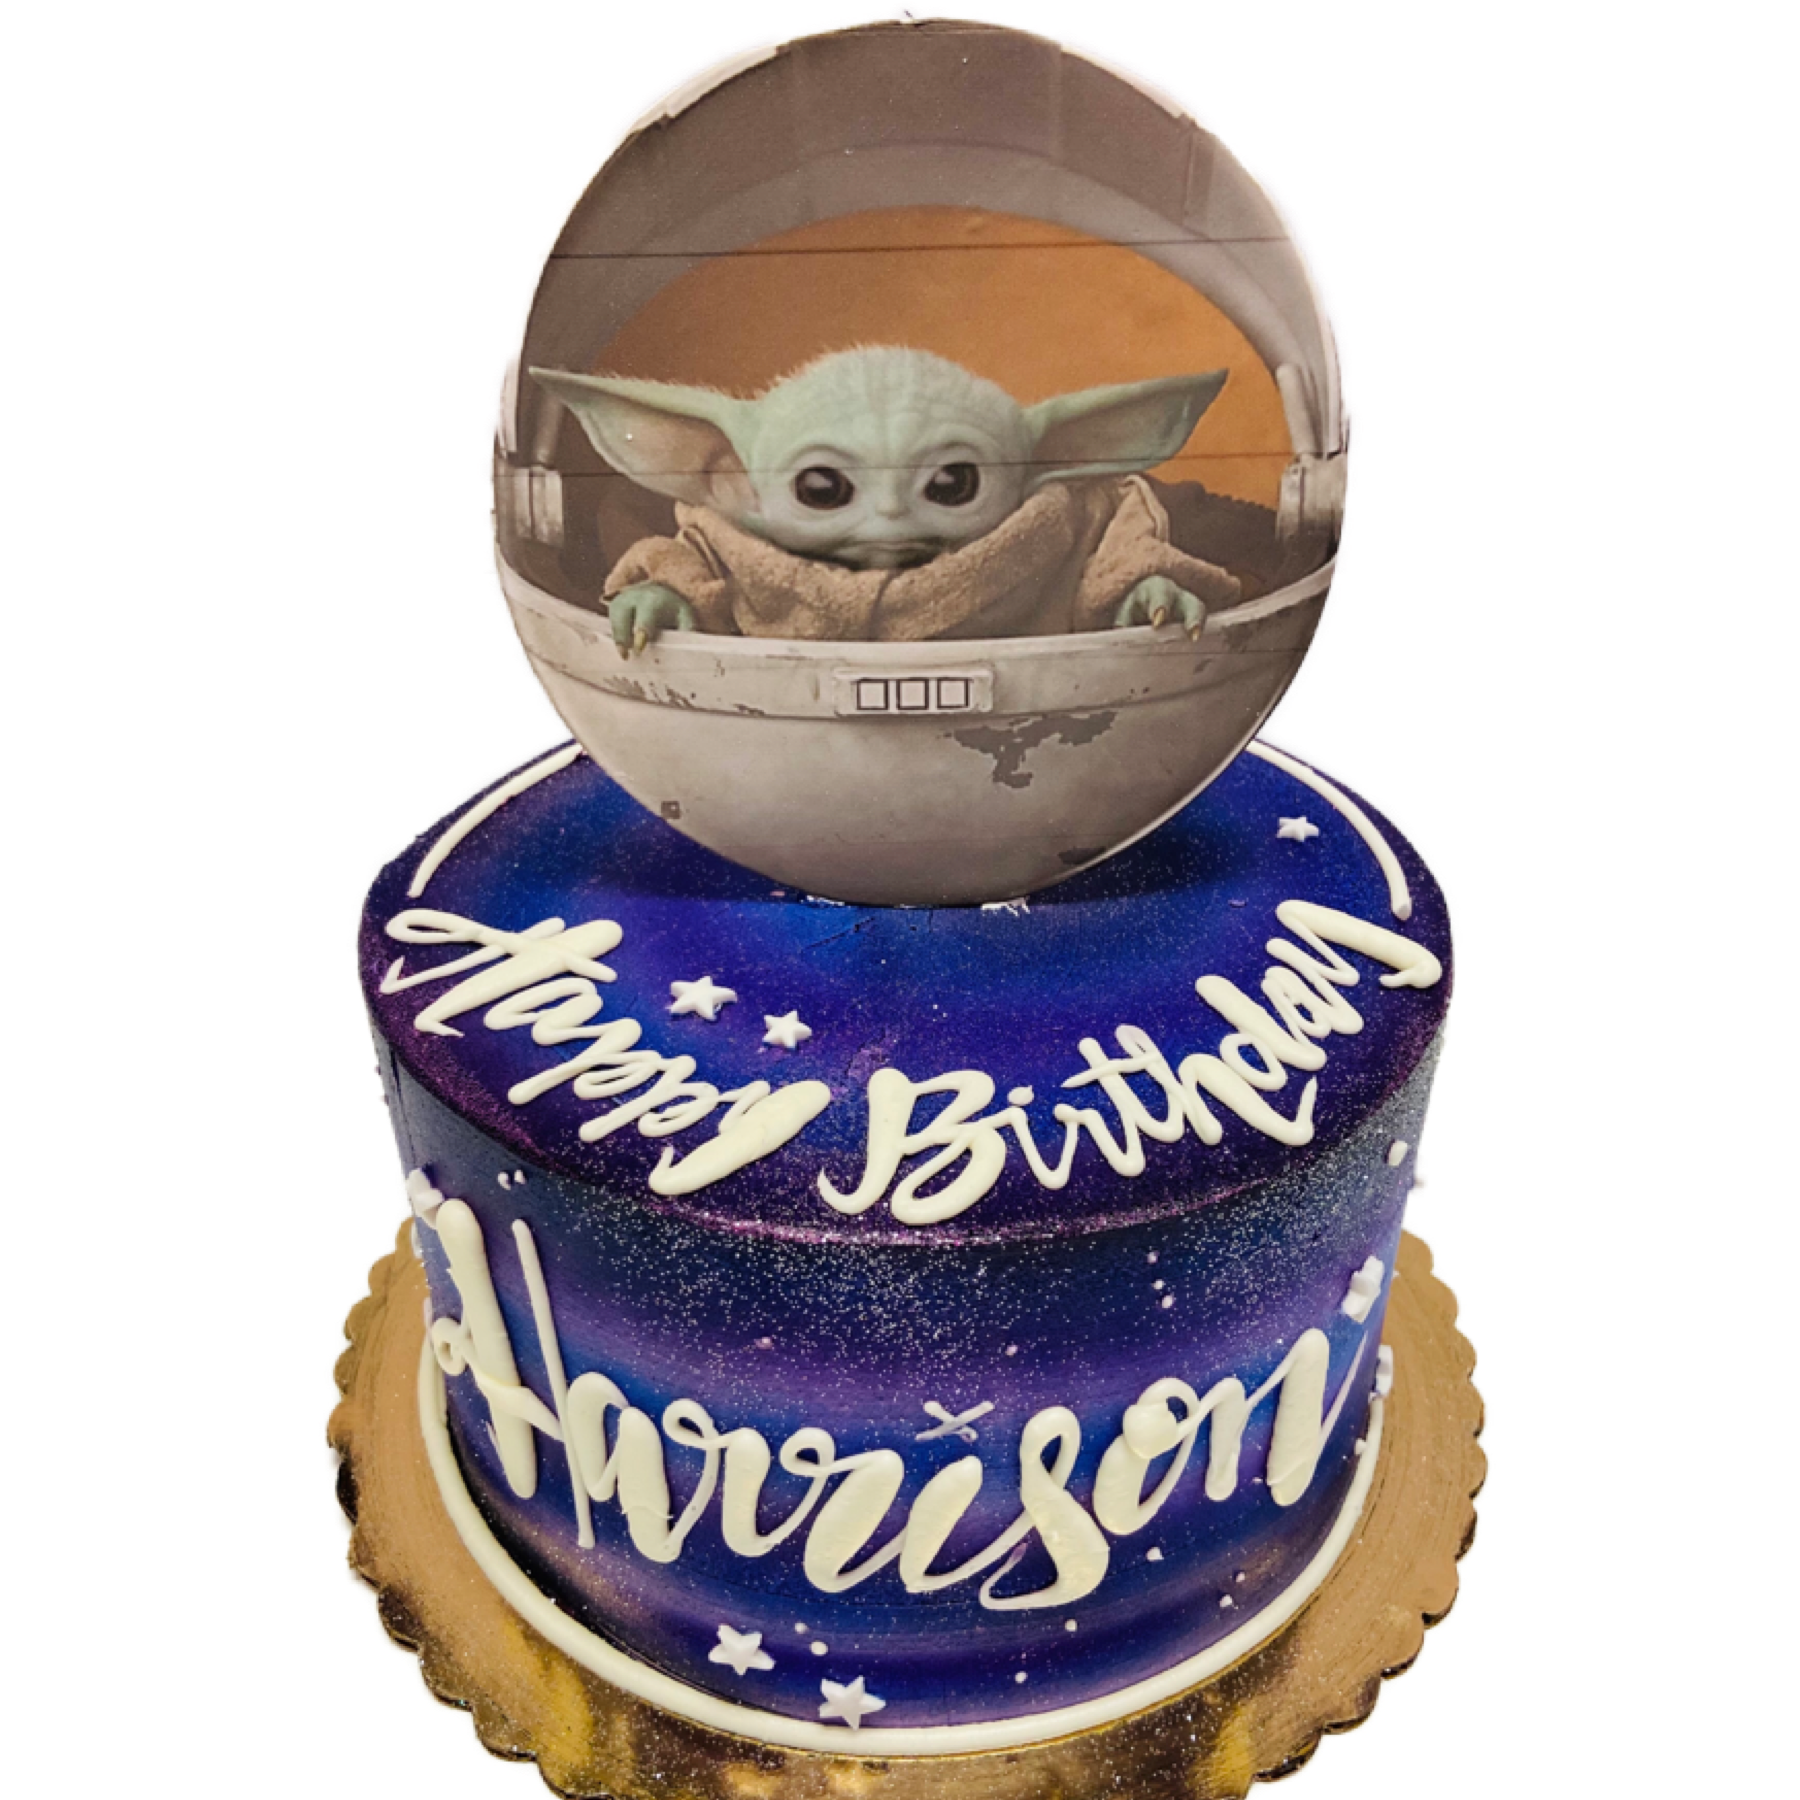 Superhero Star Wars Themed Cakes Coccadotts Cake Shop Myrtle Beach